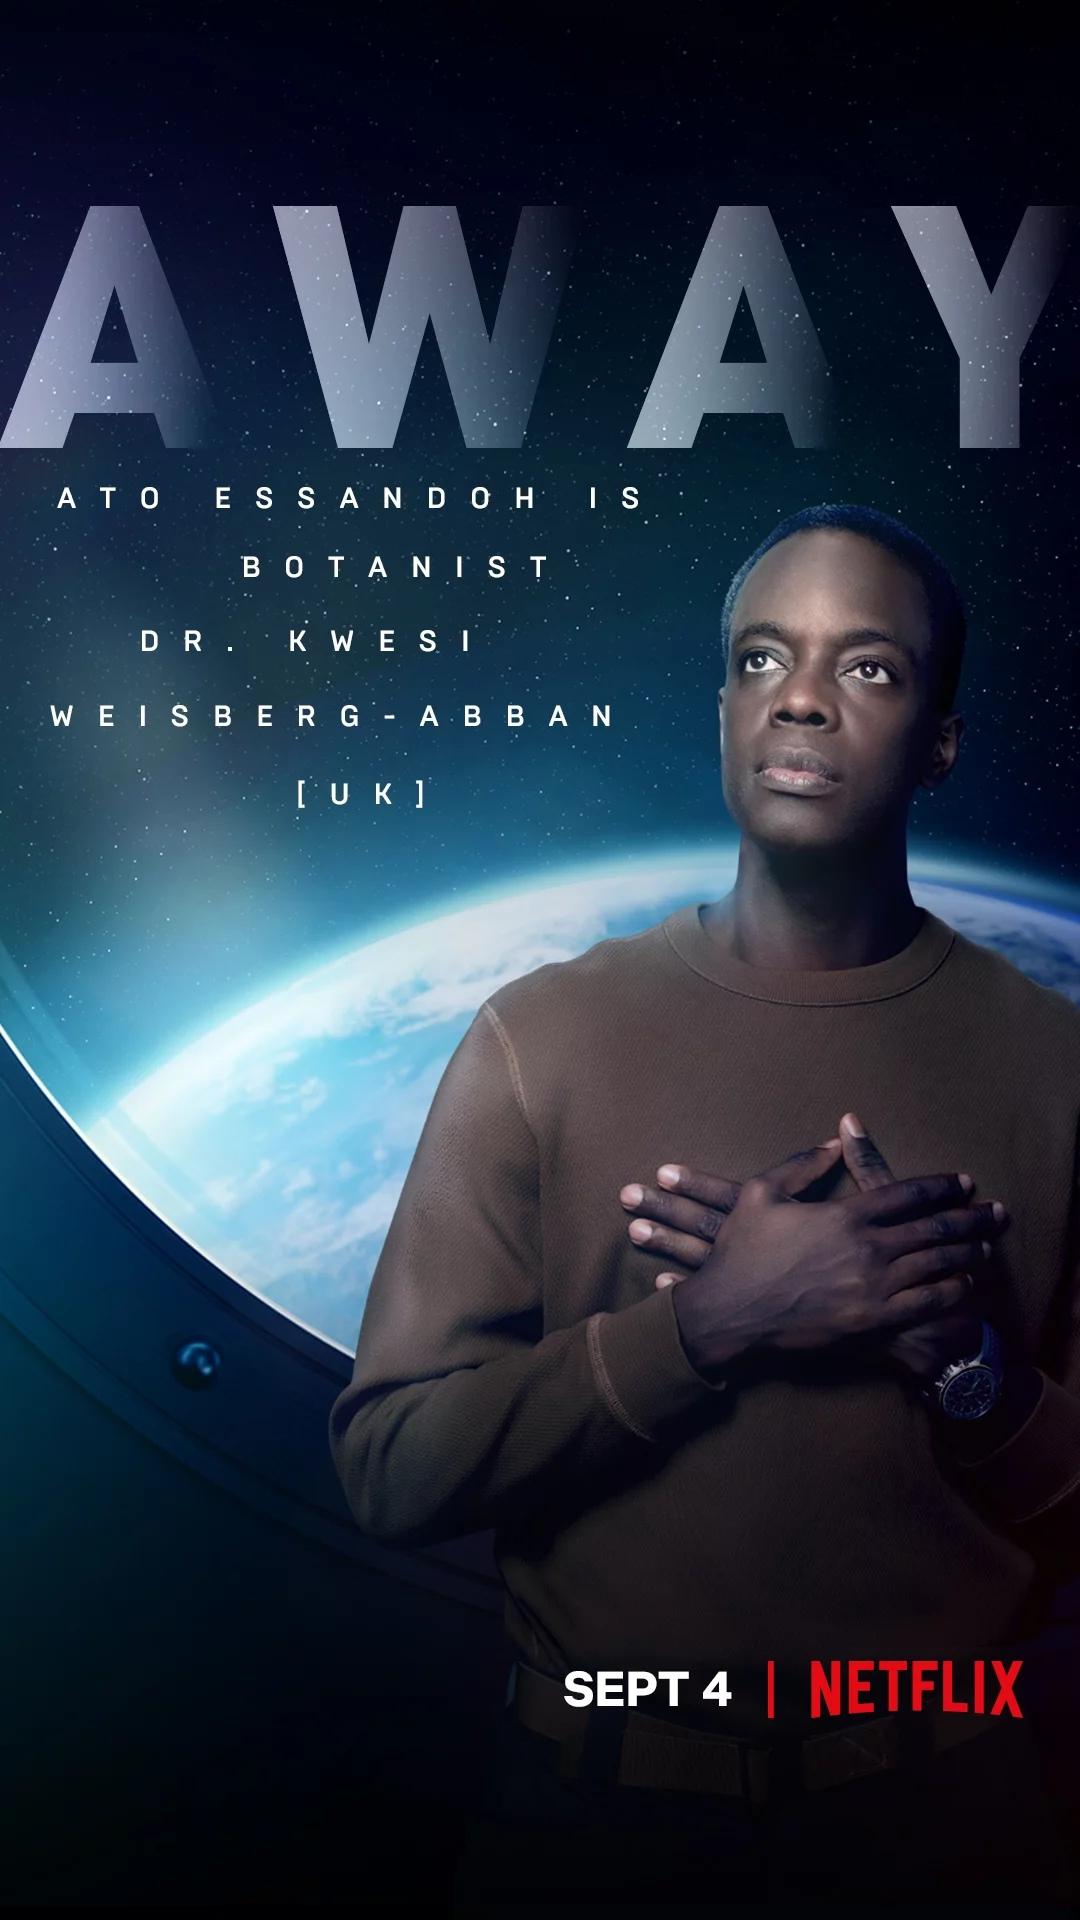 Ато эссонда. Ato Essandoh. The weekend away Netflix. Altered Carbon Season 1 poster.